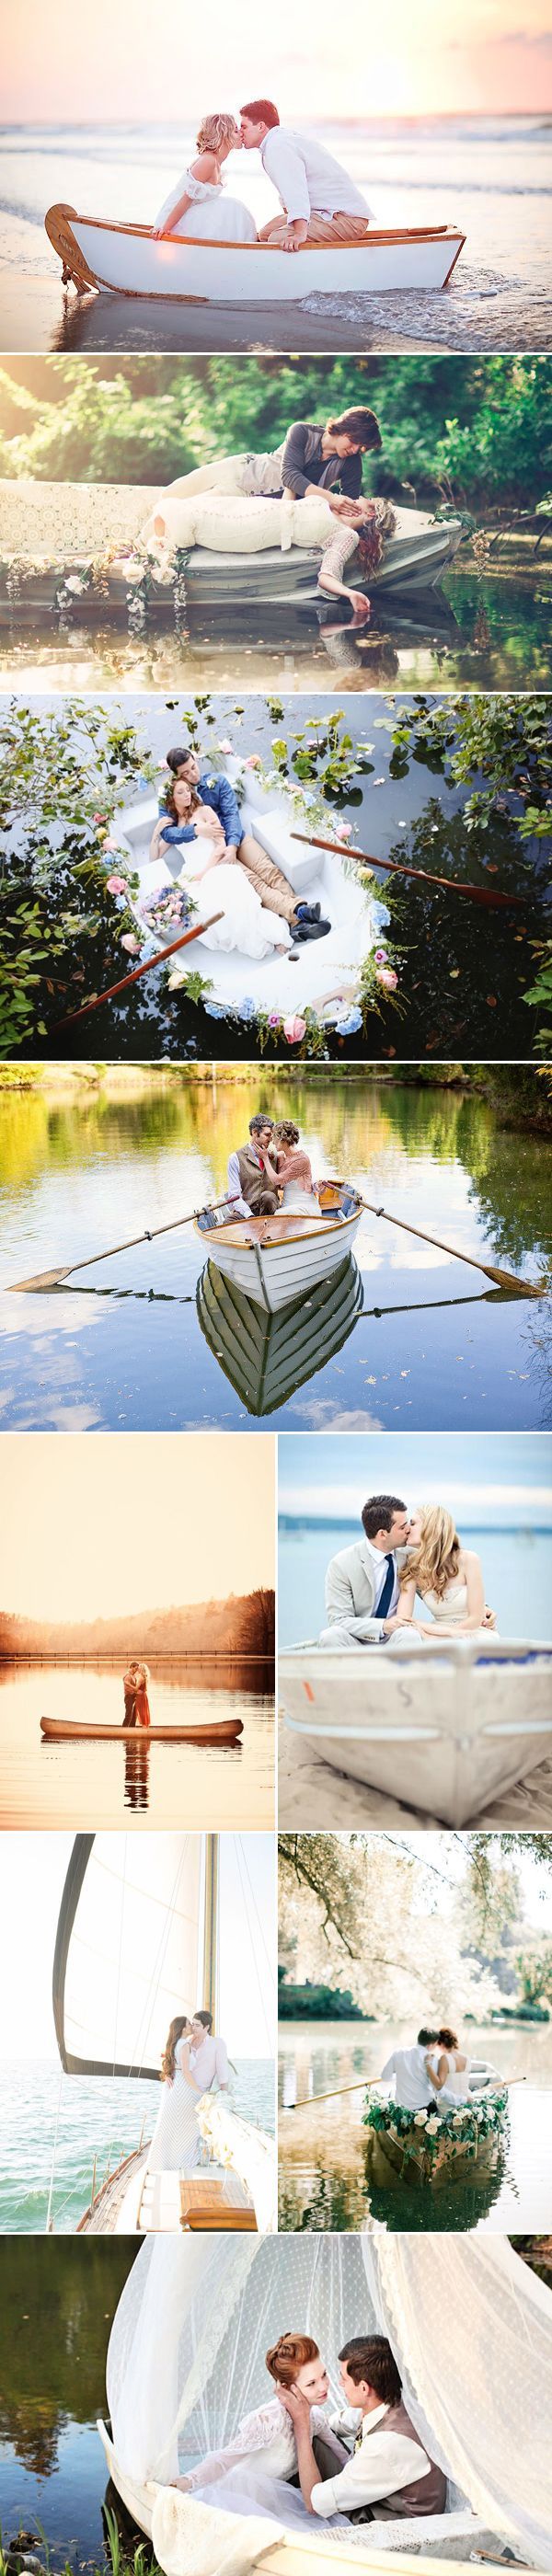 Romantic Love-Boat Engagement Photo Ideas – Praise Wedding